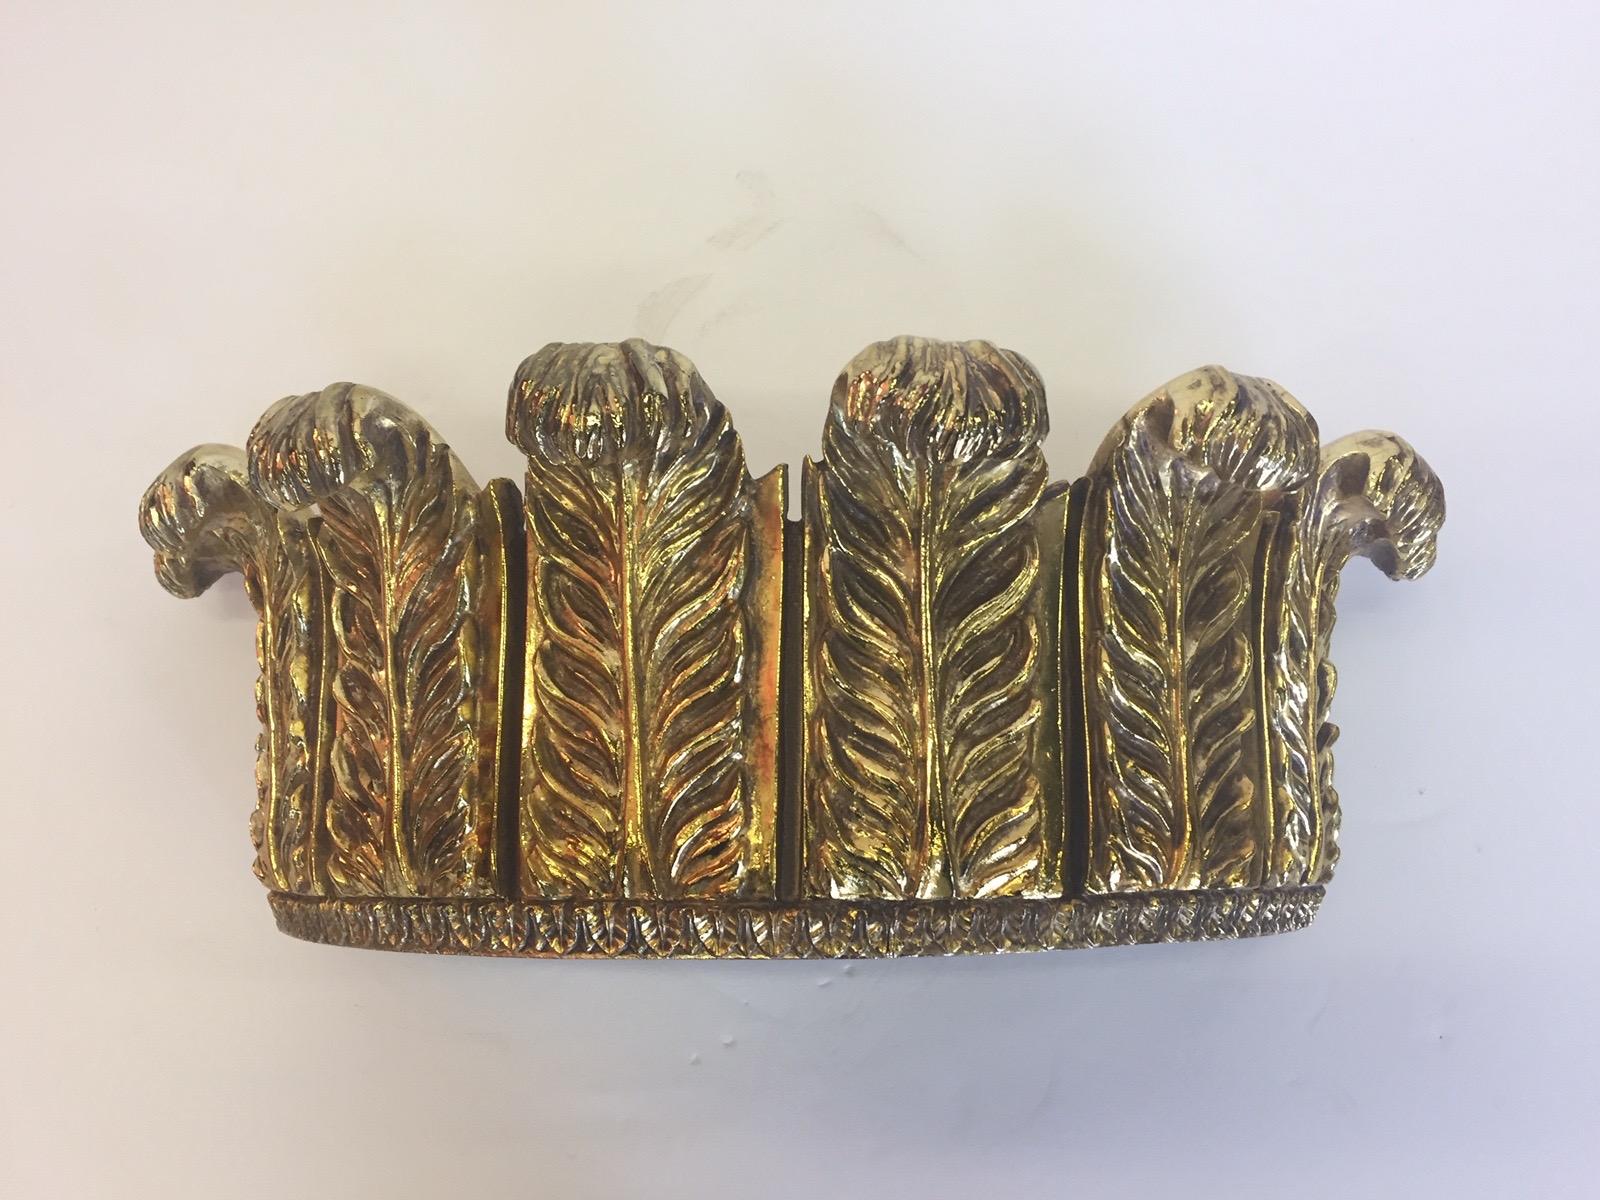 Italian Glamorous Gilded Crown Corona Bed Wall Ornament